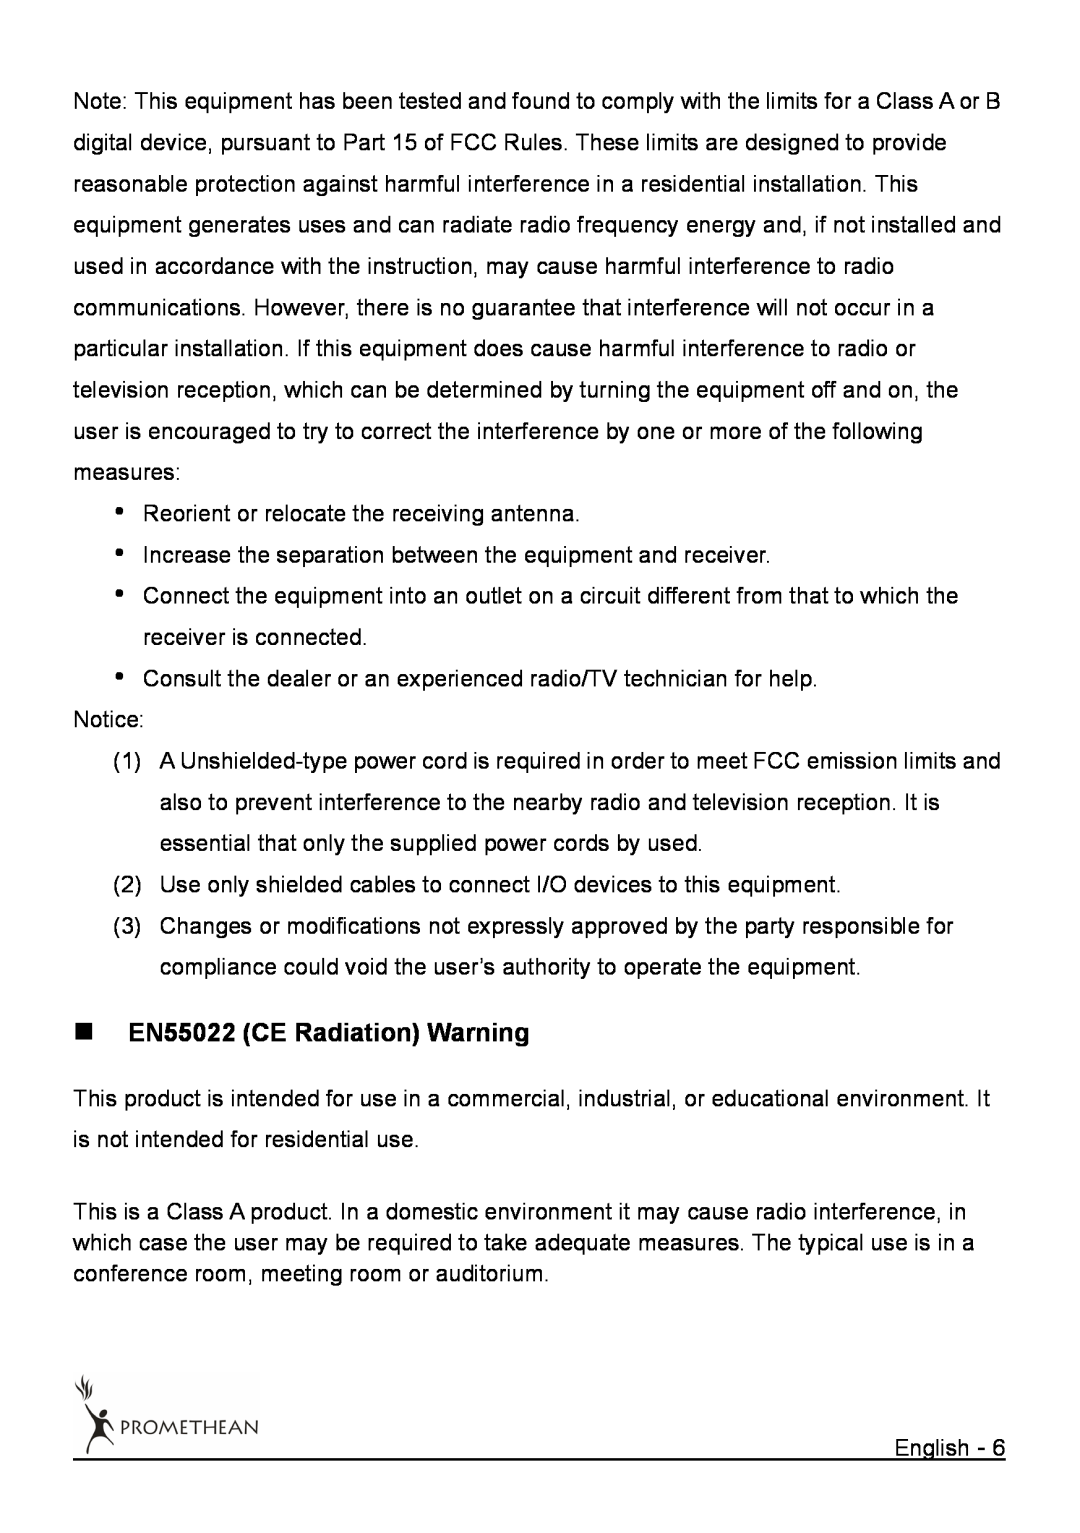 Promethean 322 user manual „EN55022 CE Radiation Warning 